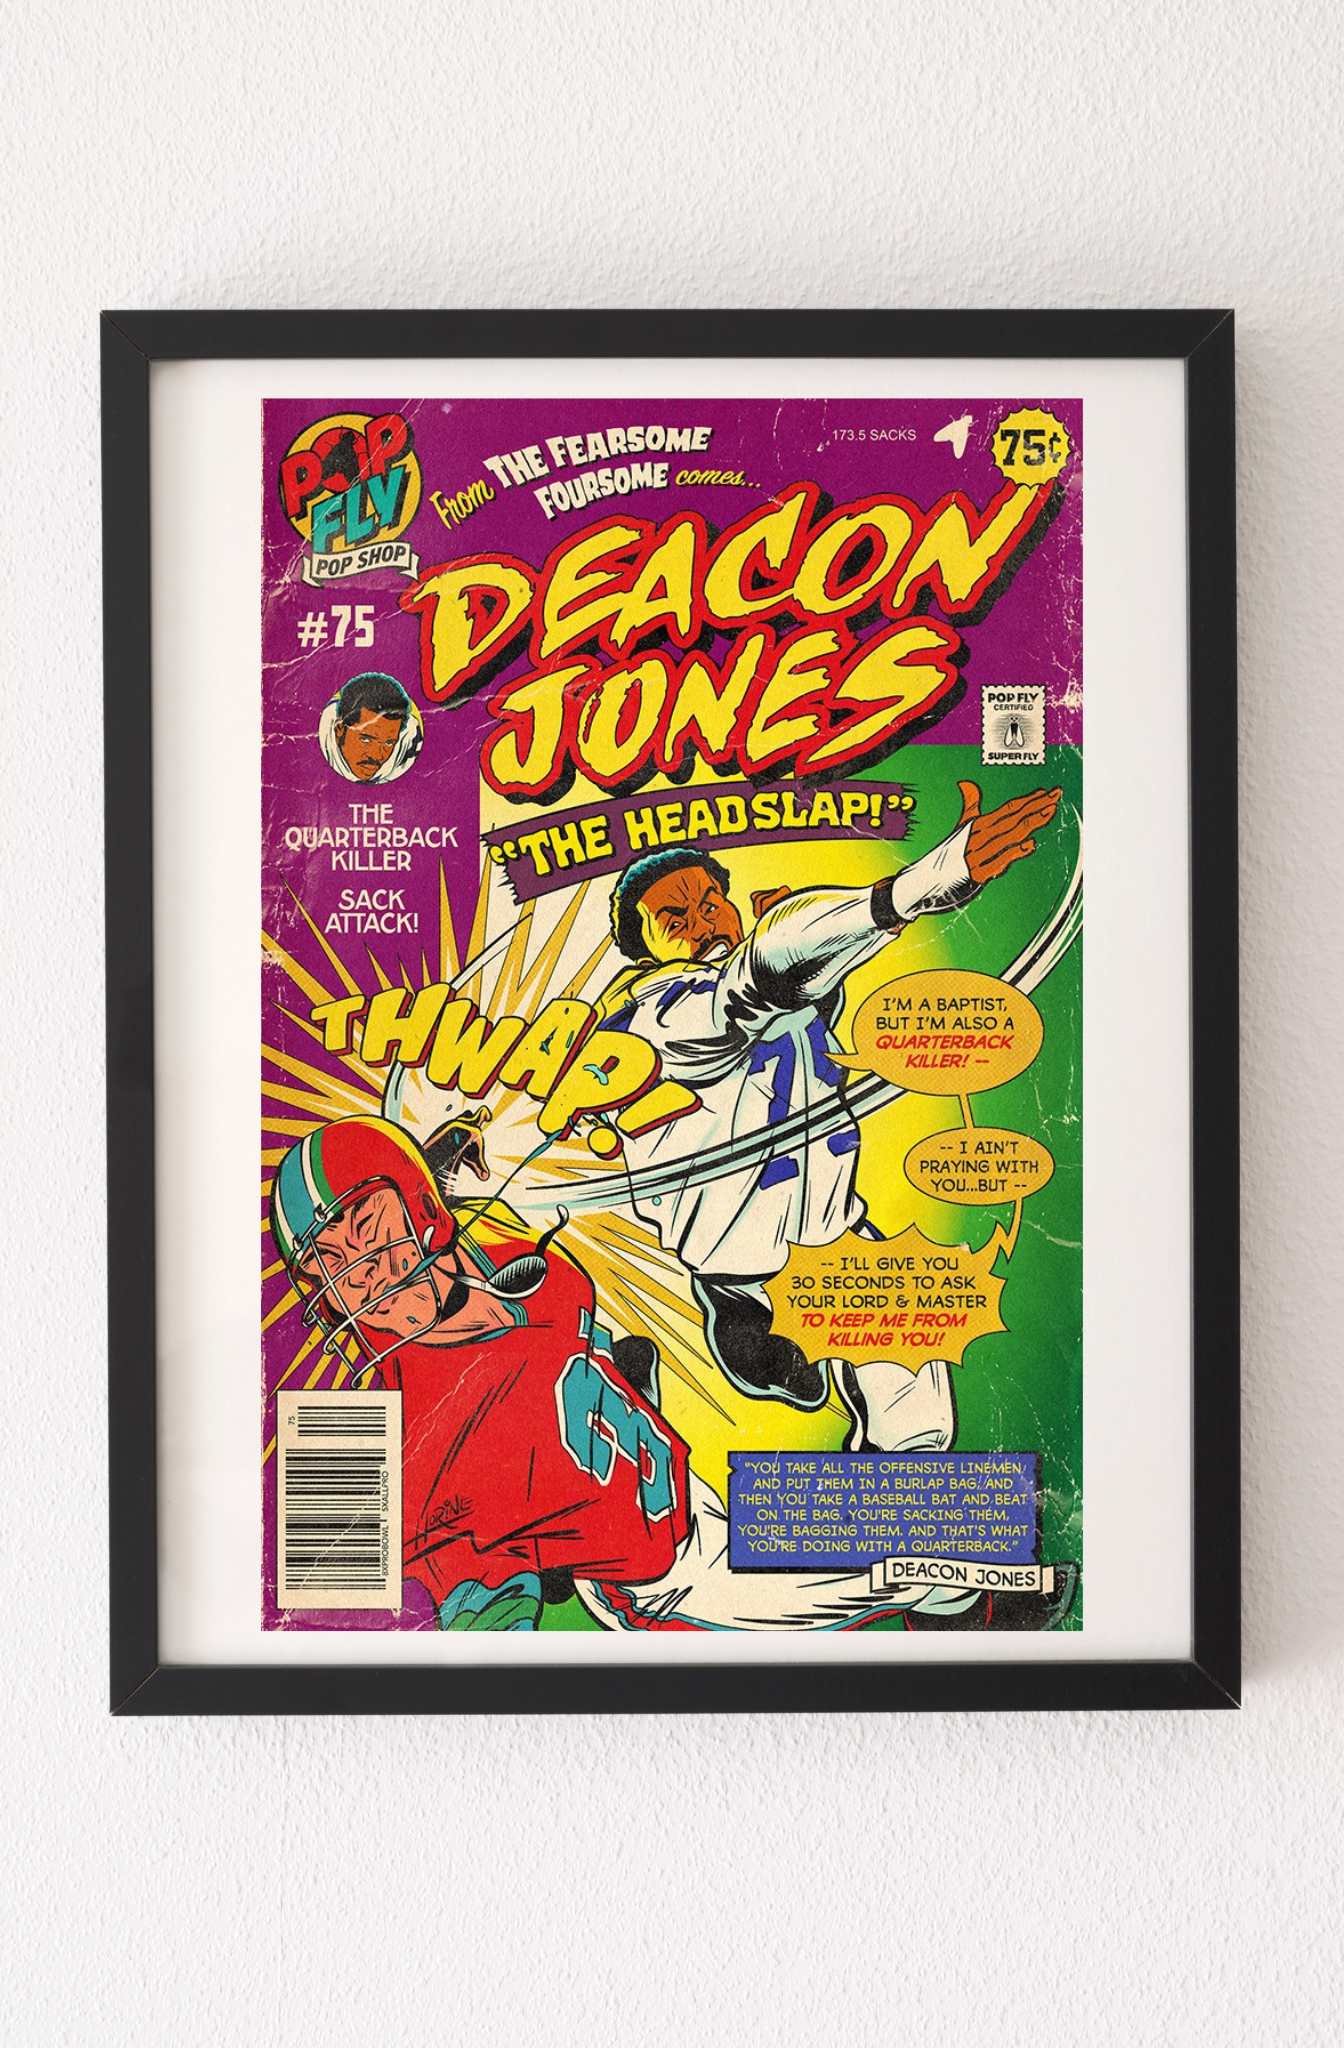 16. (SOLD OUT) "Deacon Jones"  7" x 10.5" Art Print